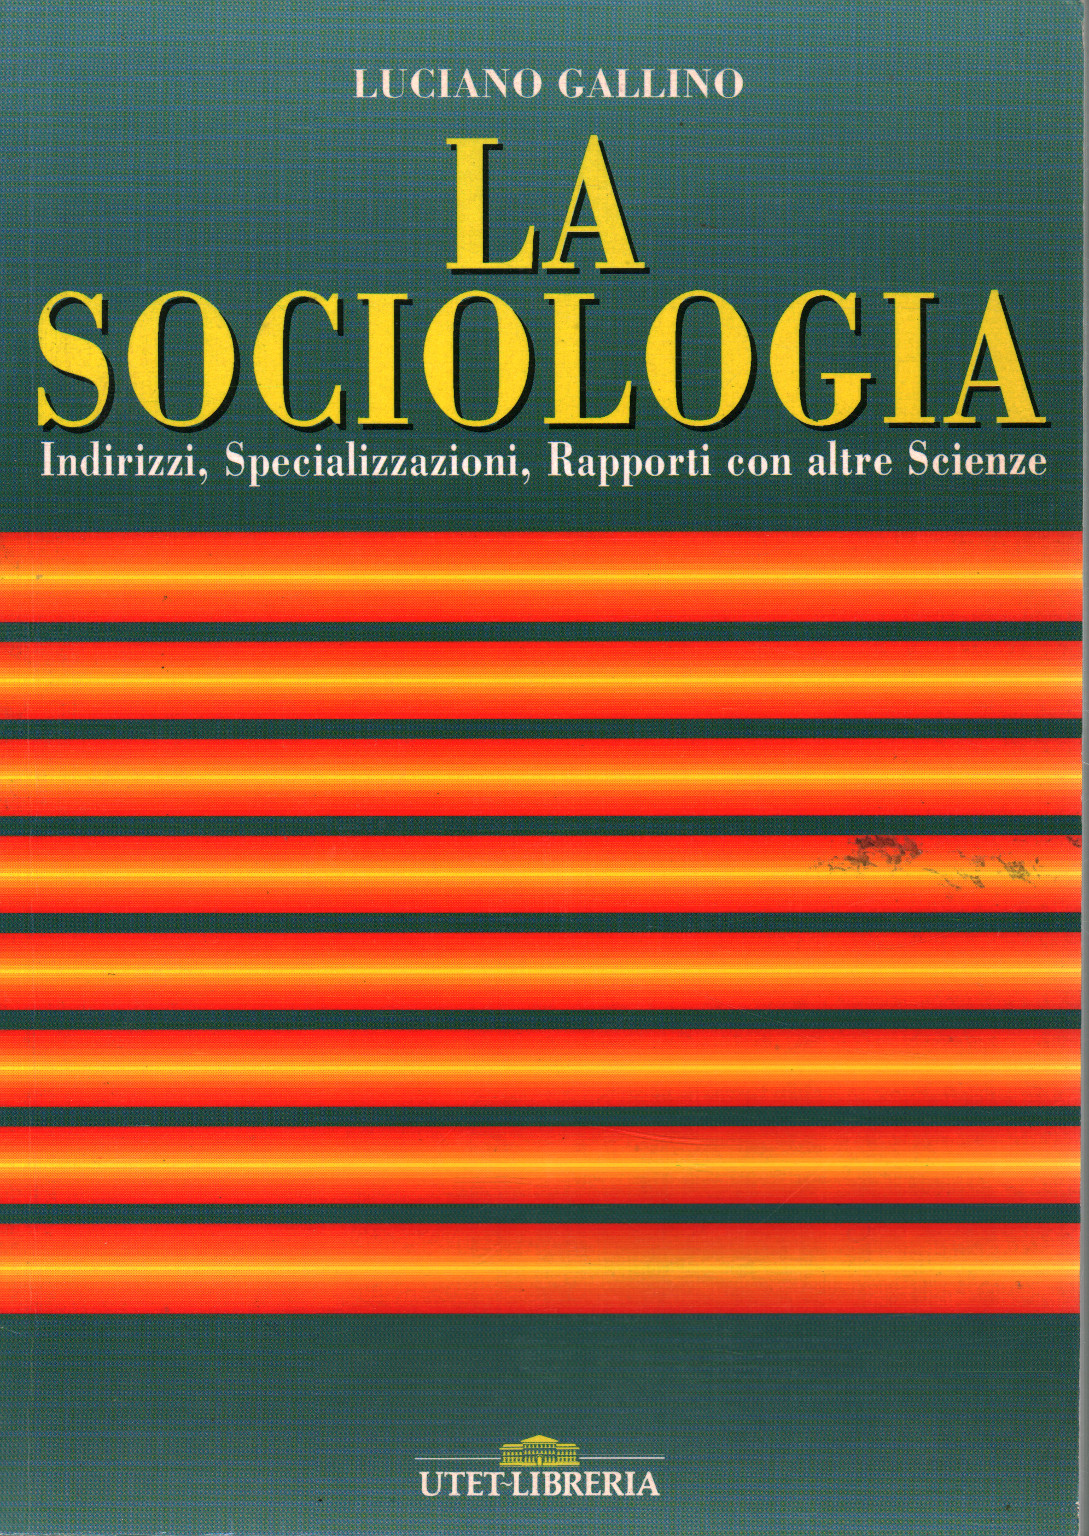 La sociologia, s.a.